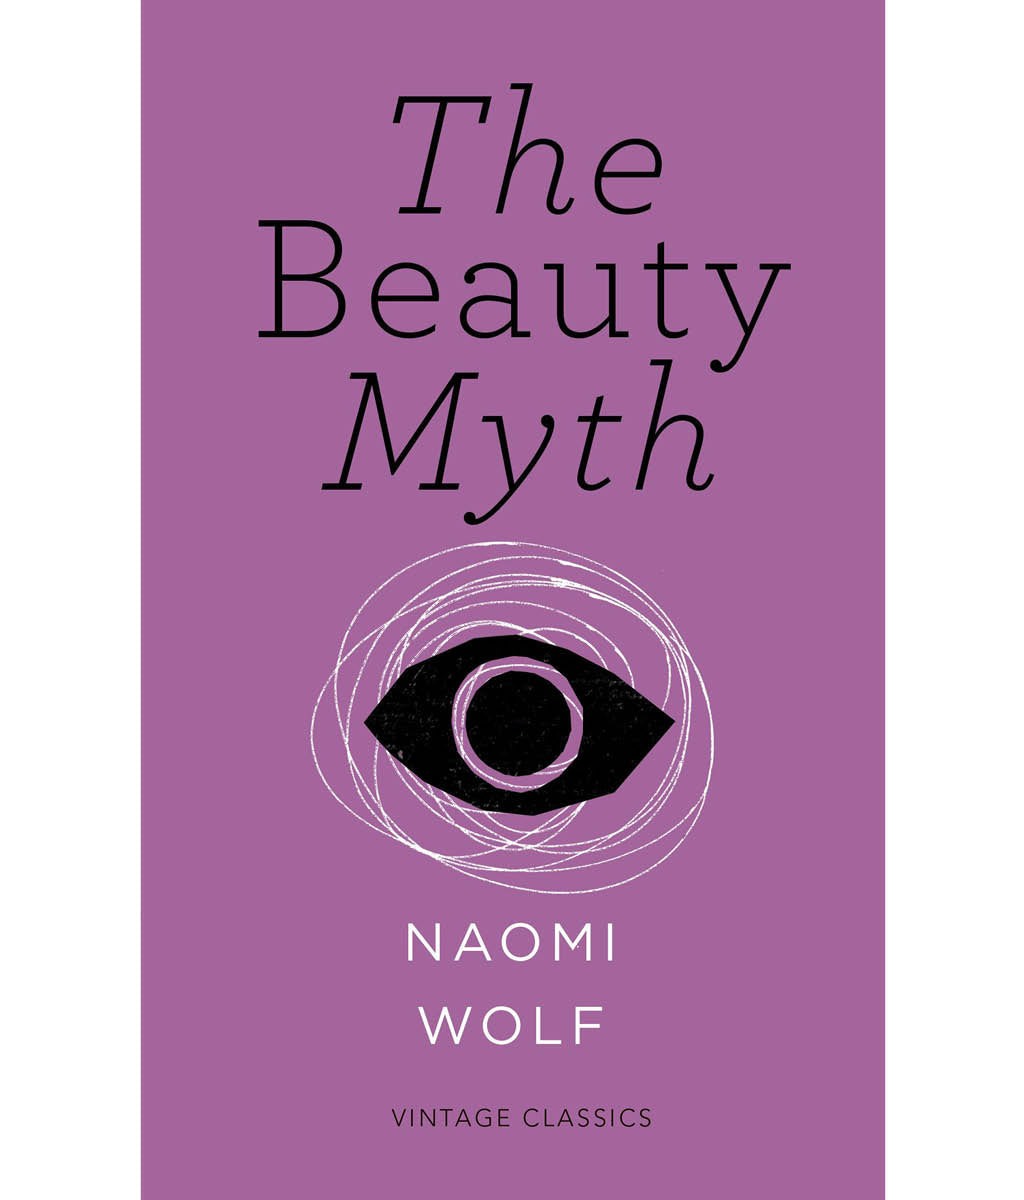 The beauty Myth by Naomi Wolf